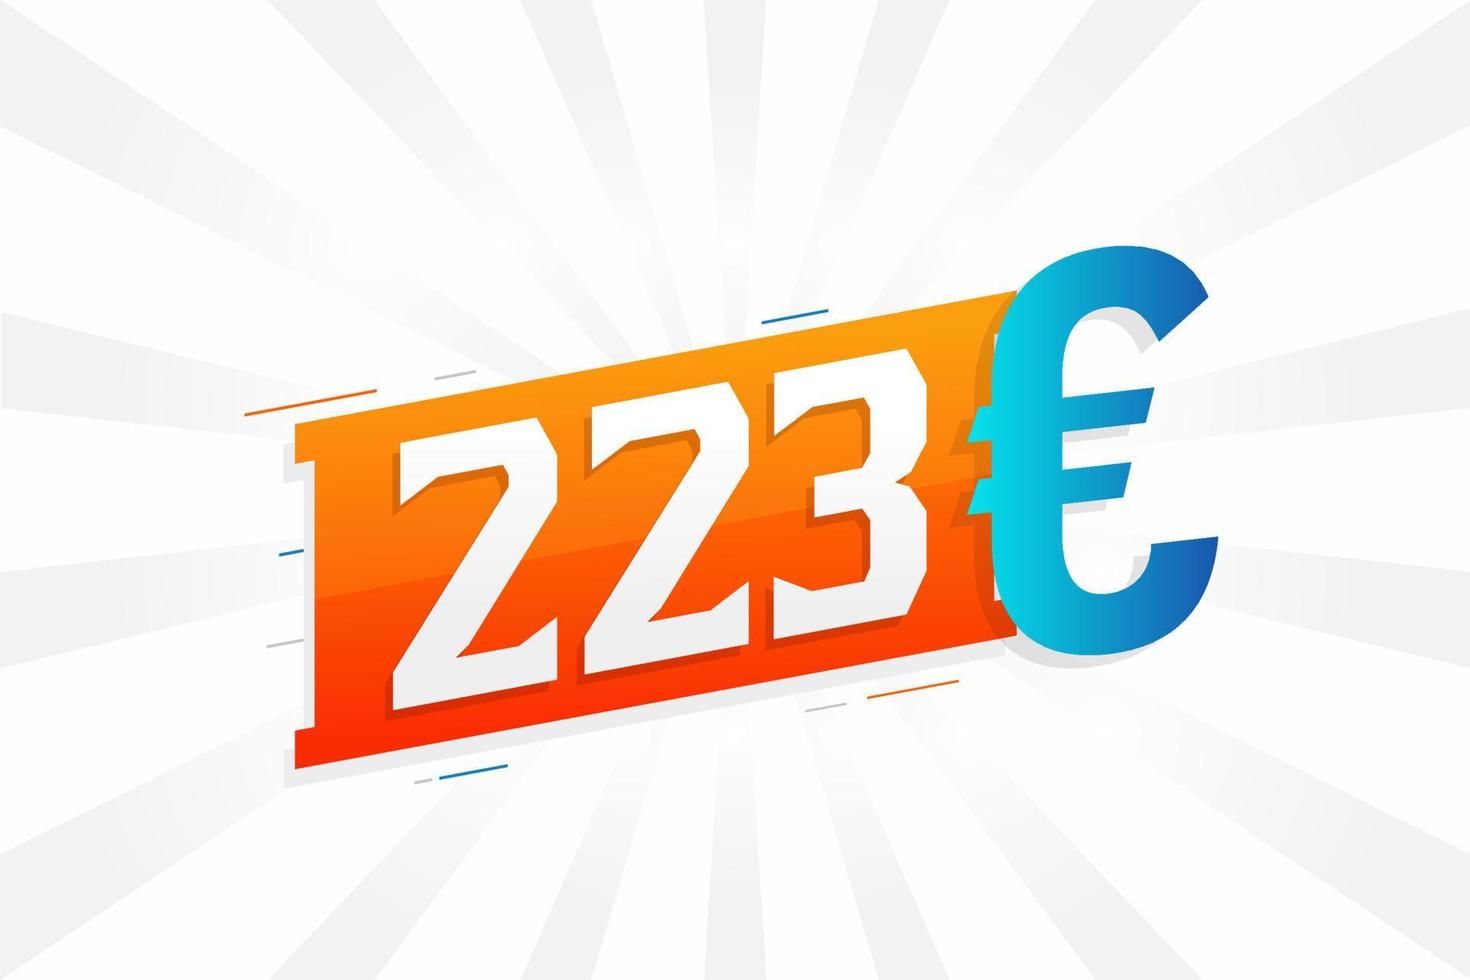 Símbolo de texto vectorial de moneda de 223 euros. 223 euro vector de stock de dinero de la unión europea